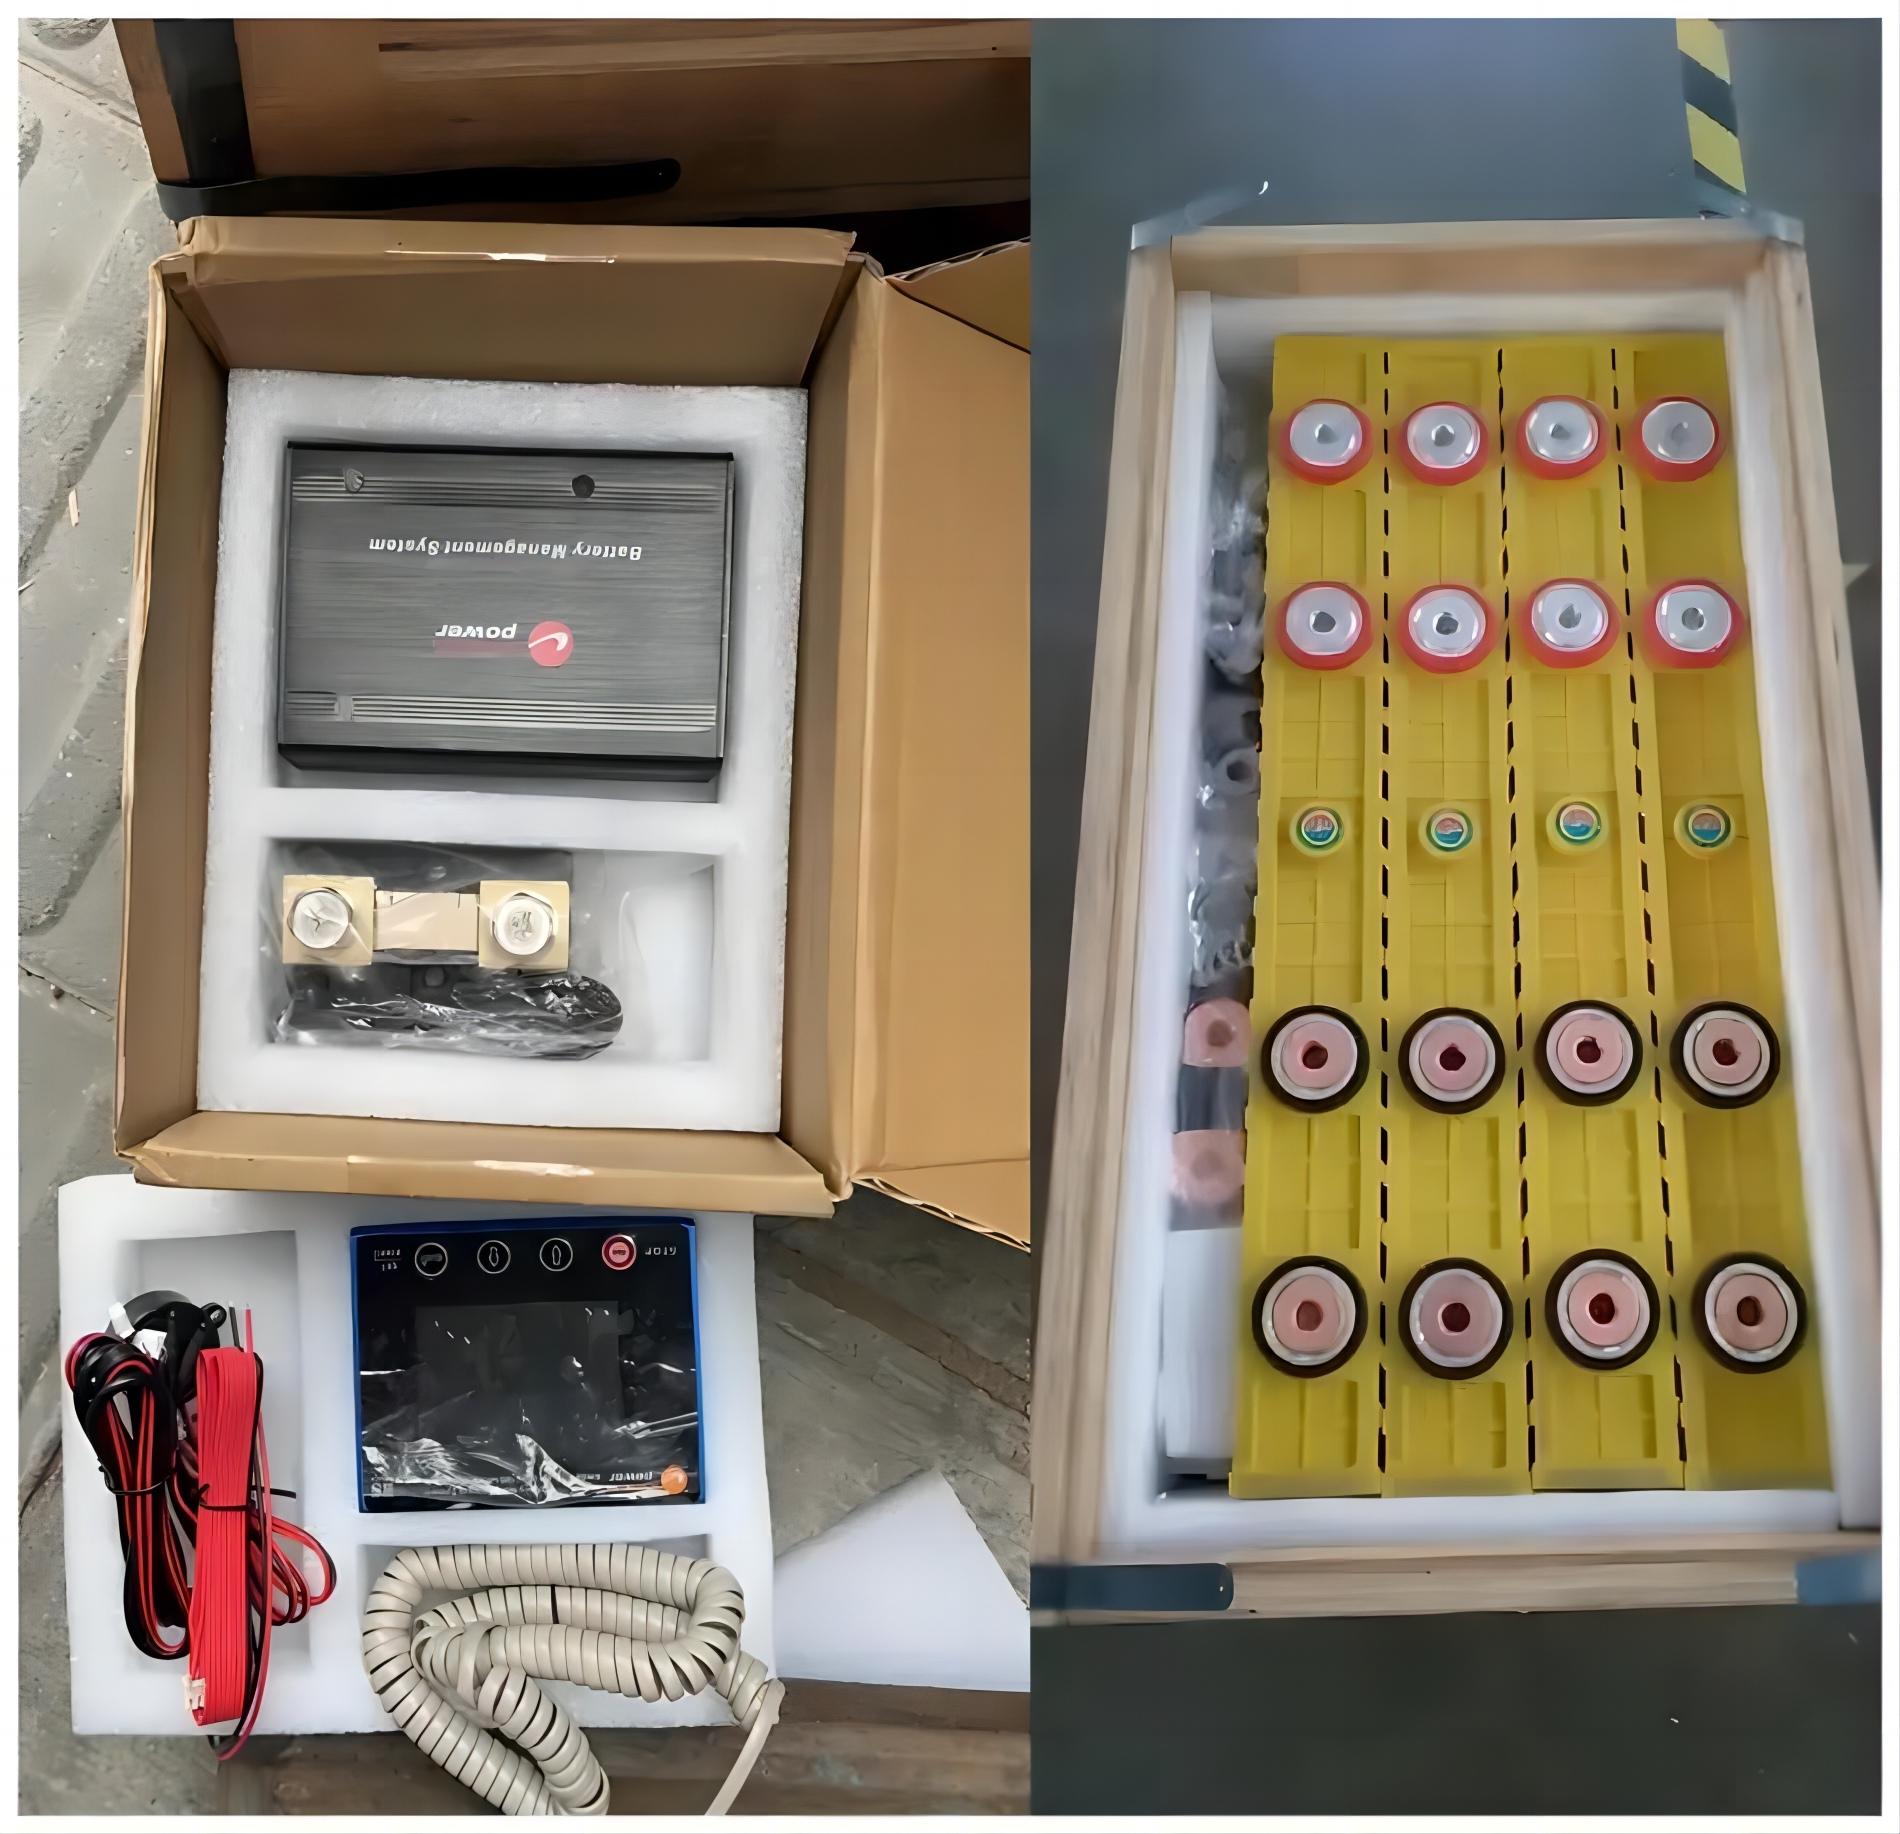 4pcs Thunder Sky Winston Battery 3.2V 700Ah LiFePO4 prismatic cells were shipped to Malaysia